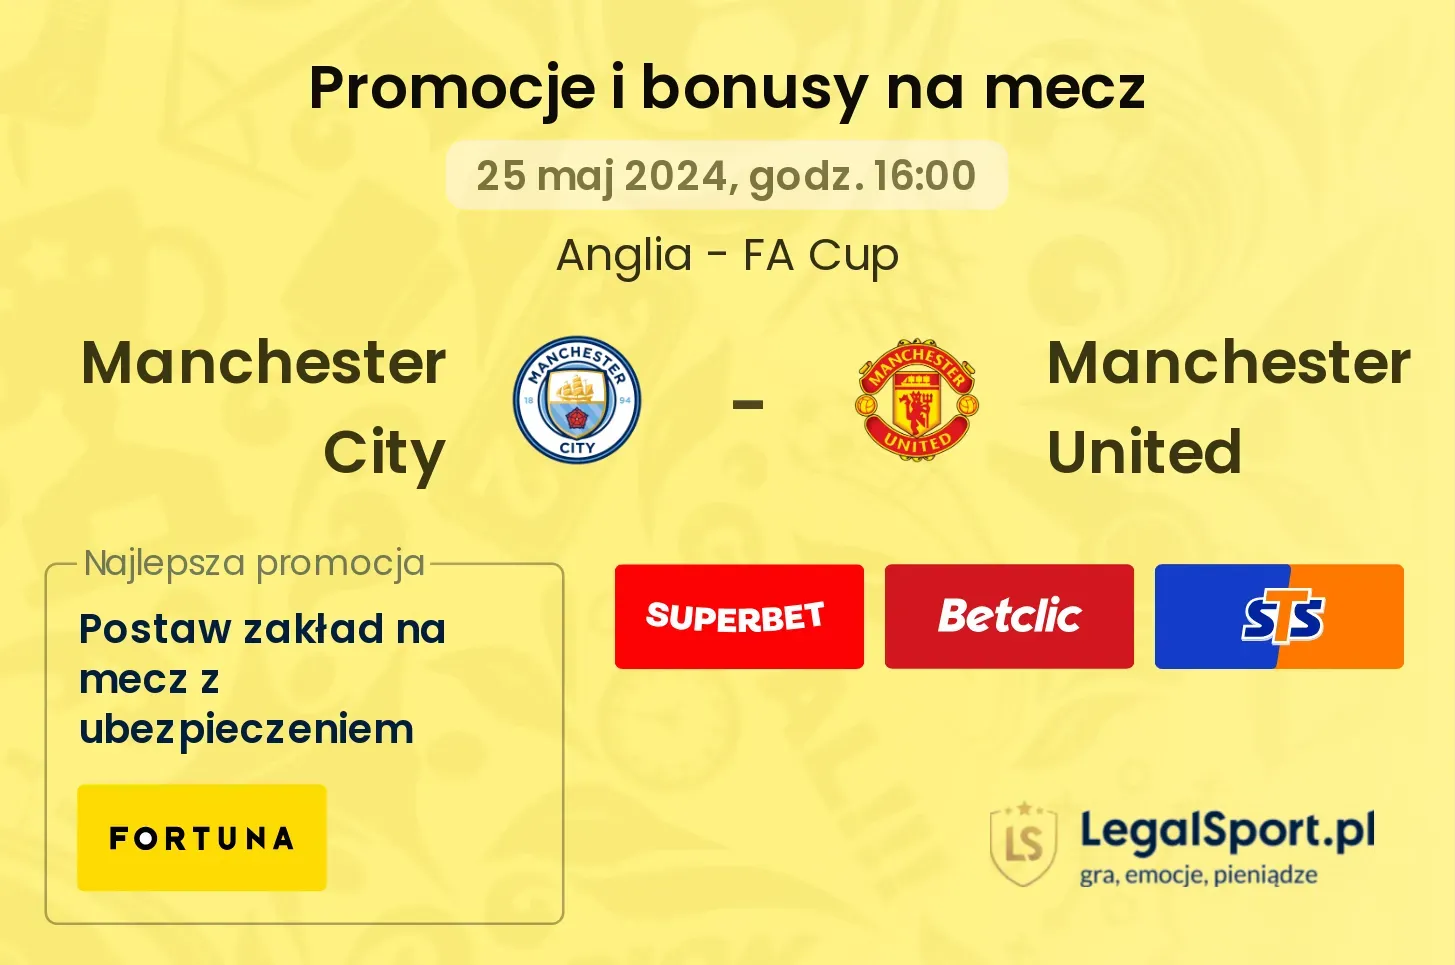 Manchester City - Manchester United promocje bonusy na mecz